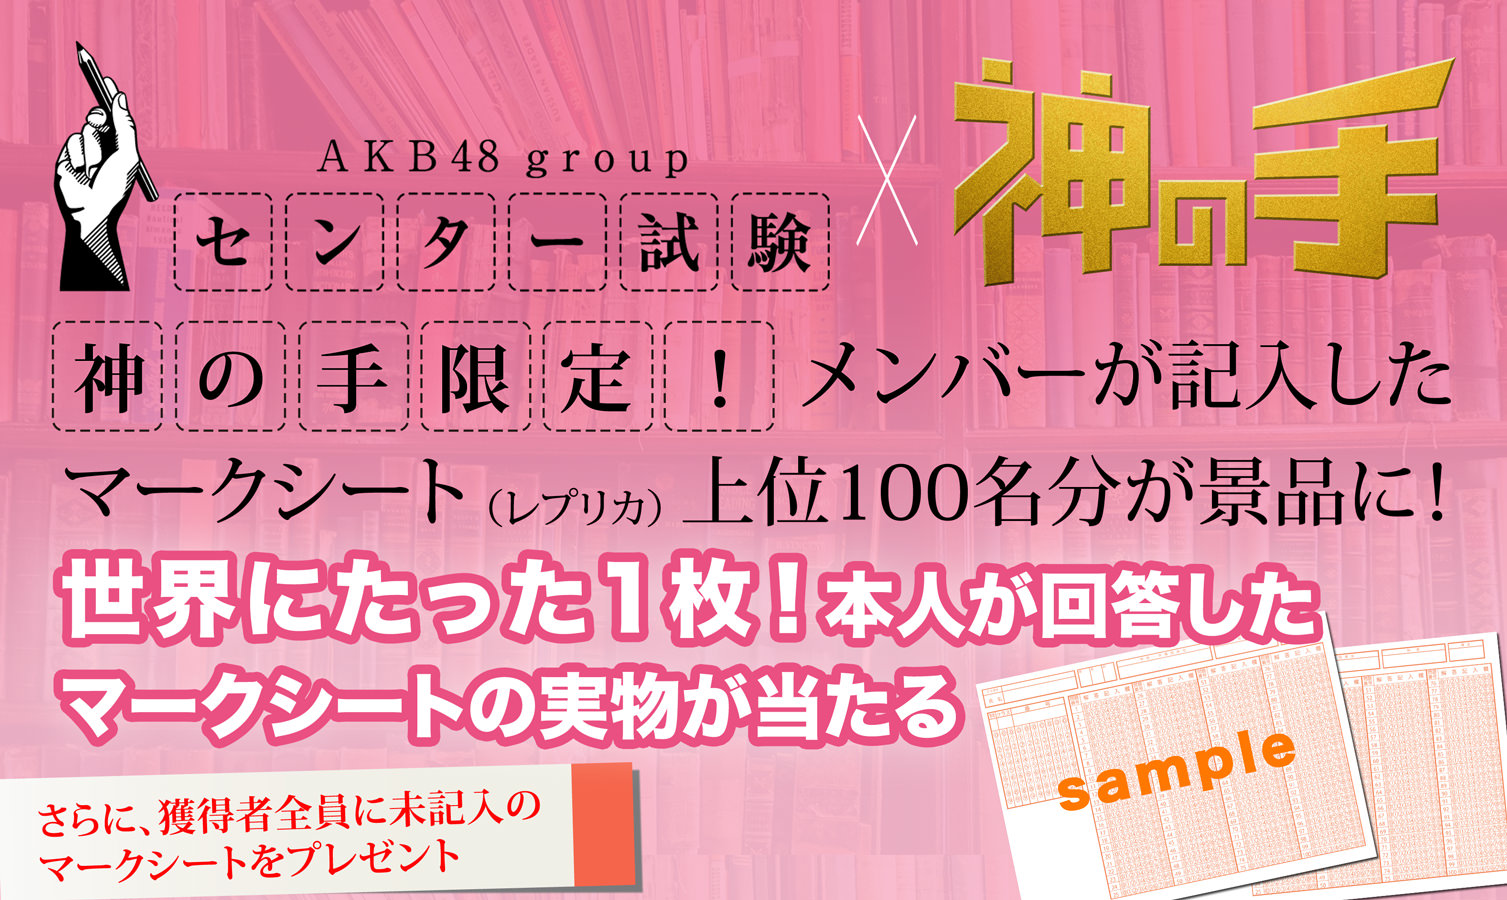 3Dスマホクレーンゲーム「神の手」×「AKB48グループセンター試験」コラボ企画